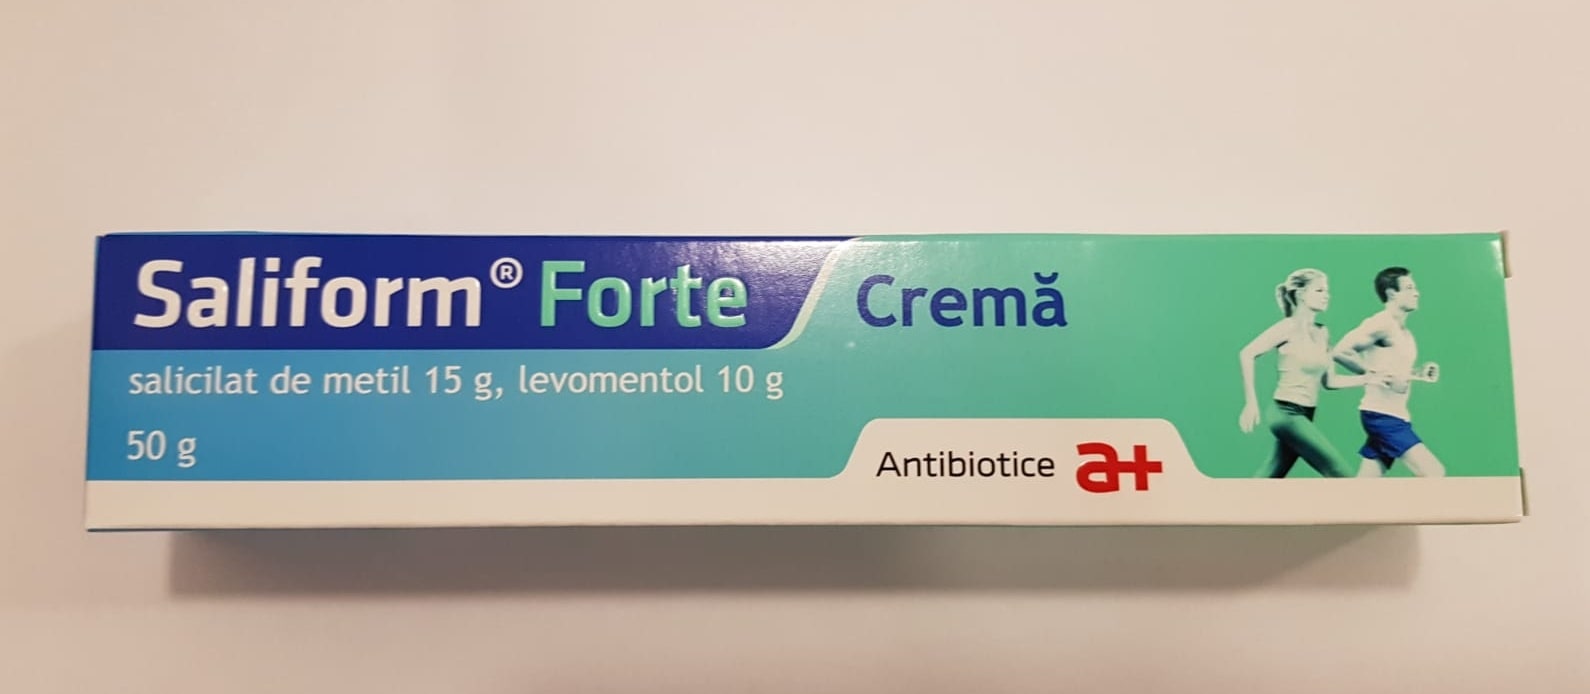 Saliform Forte crema, 50 g, Antibiotice